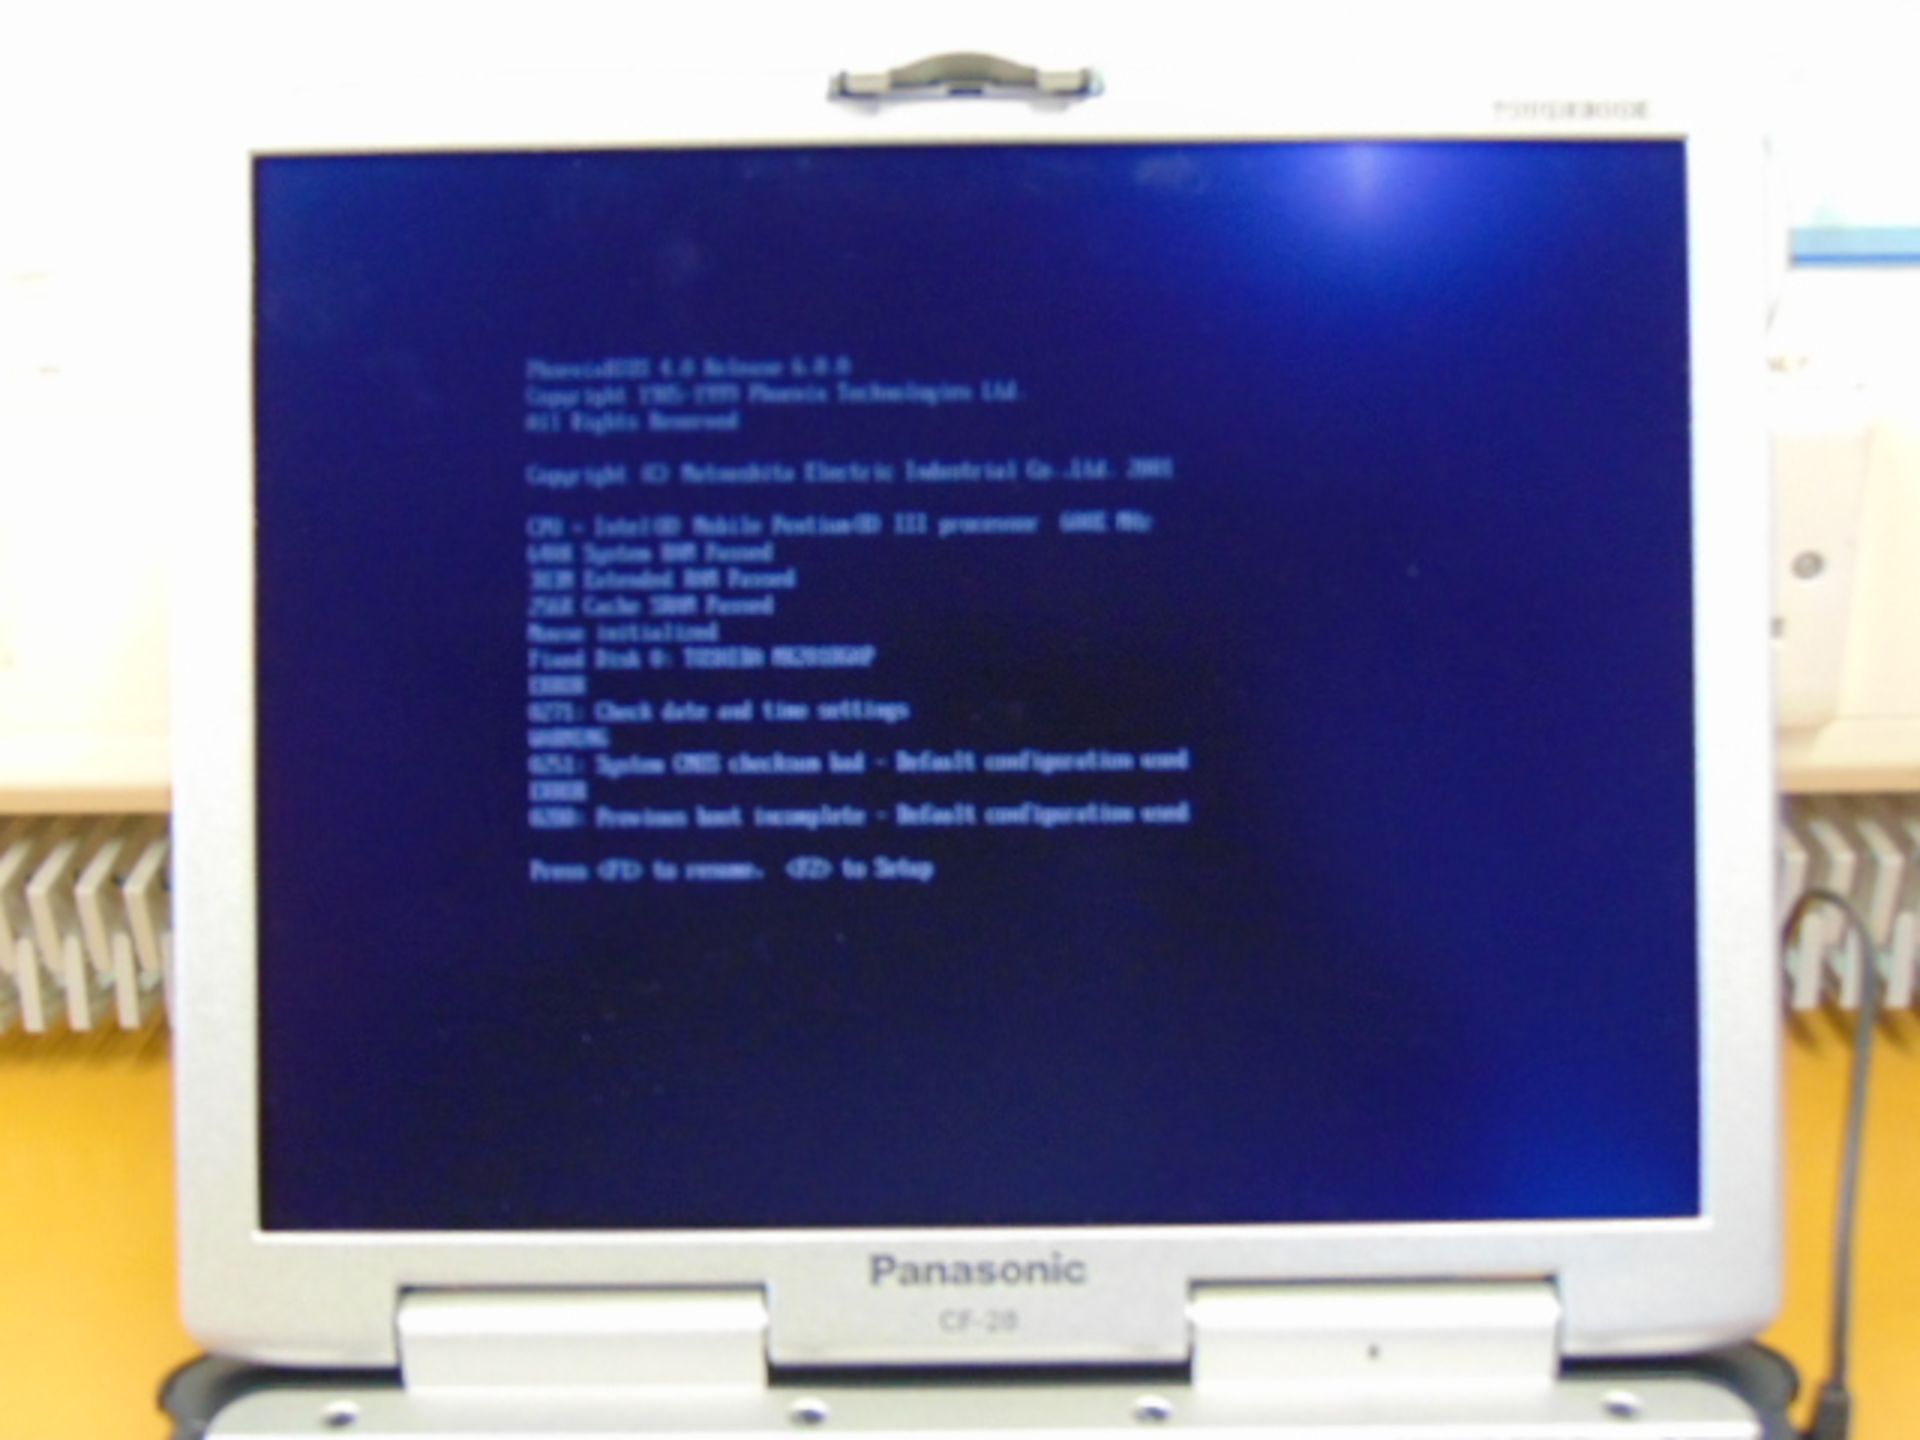 Panasonic CF-28 Toughbook Laptop - Image 6 of 15